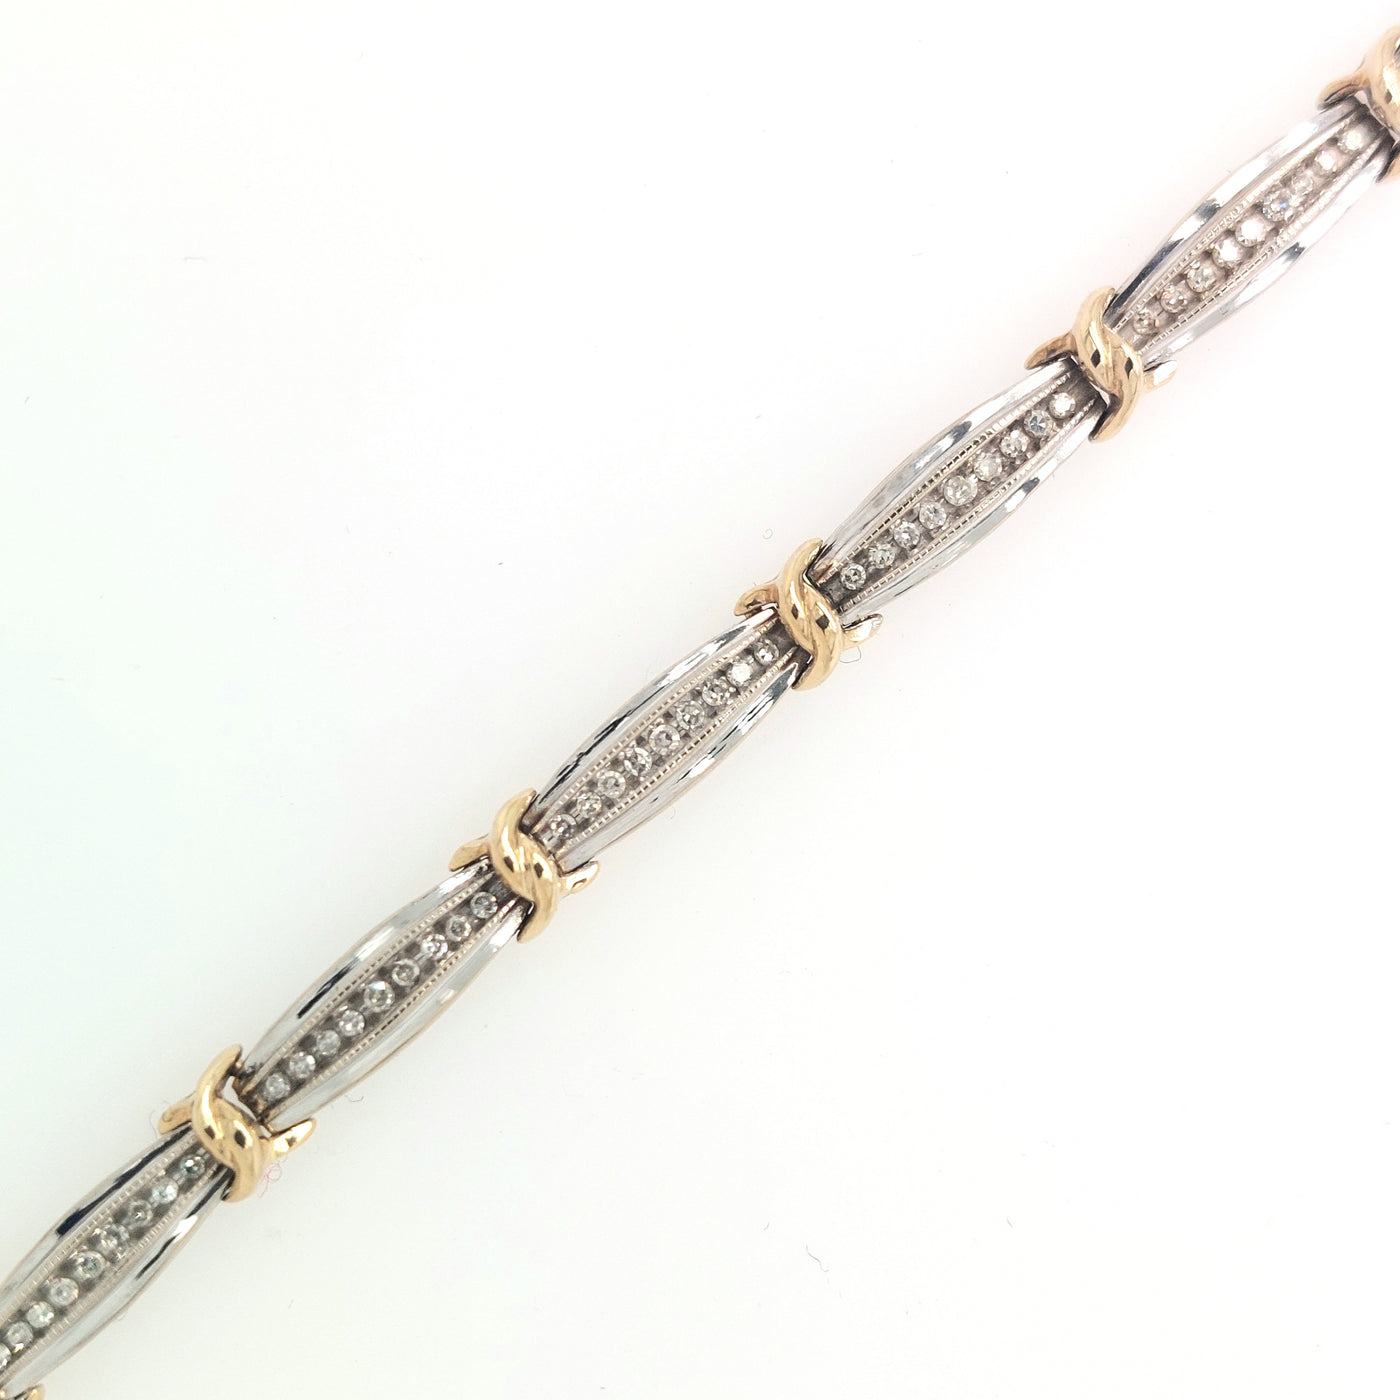 10KW Two-Tone Diamond Tennis Bracelet approx 0.50ctTW